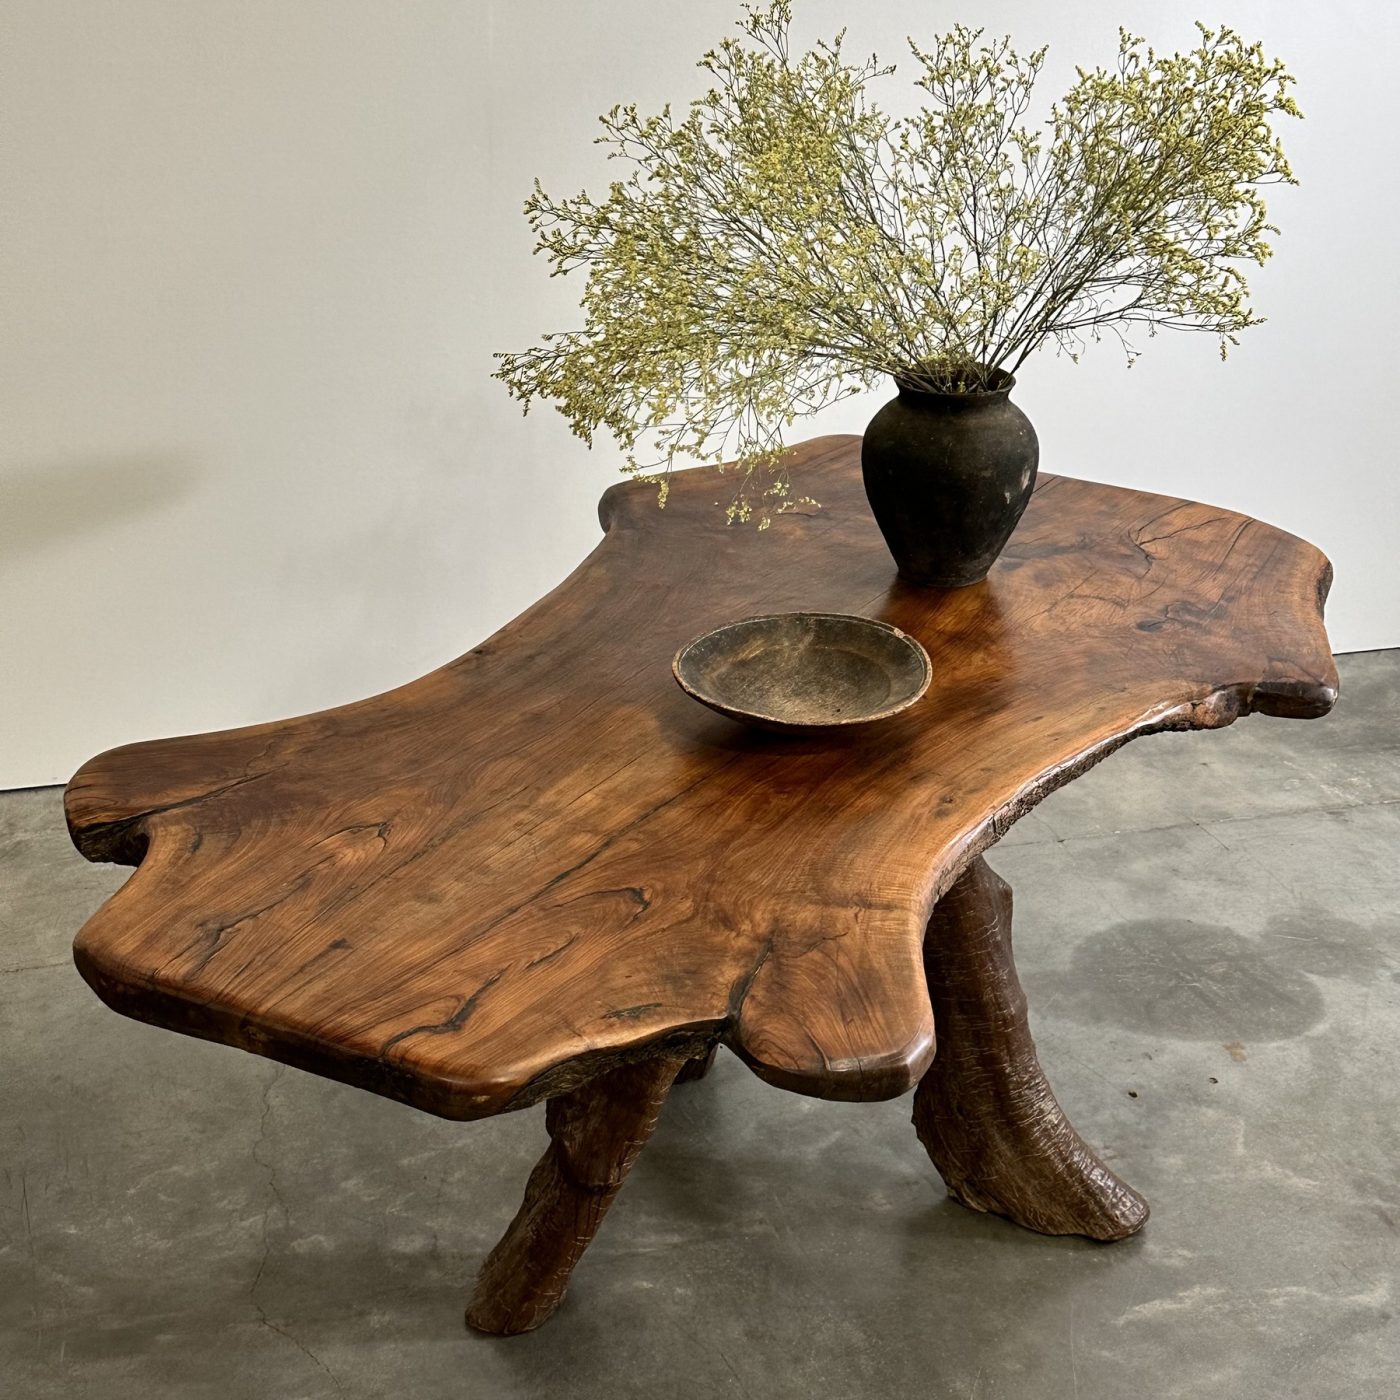 objet-vagabond-olive-table0009